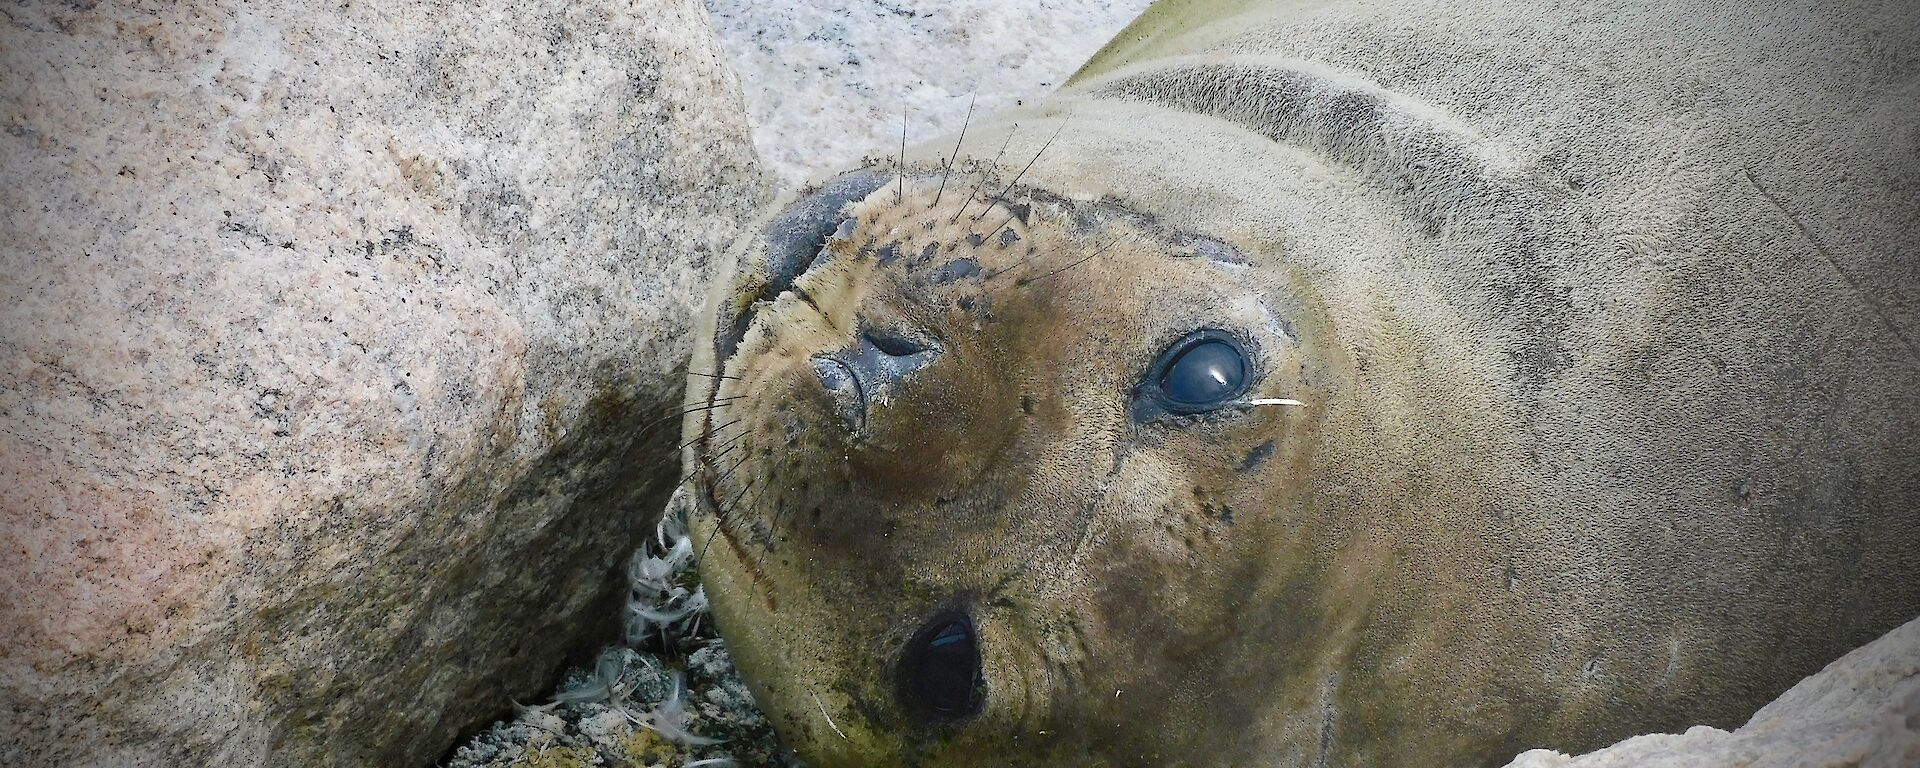 Elephant seal pup laying upside-down between rocks, looking at camera.